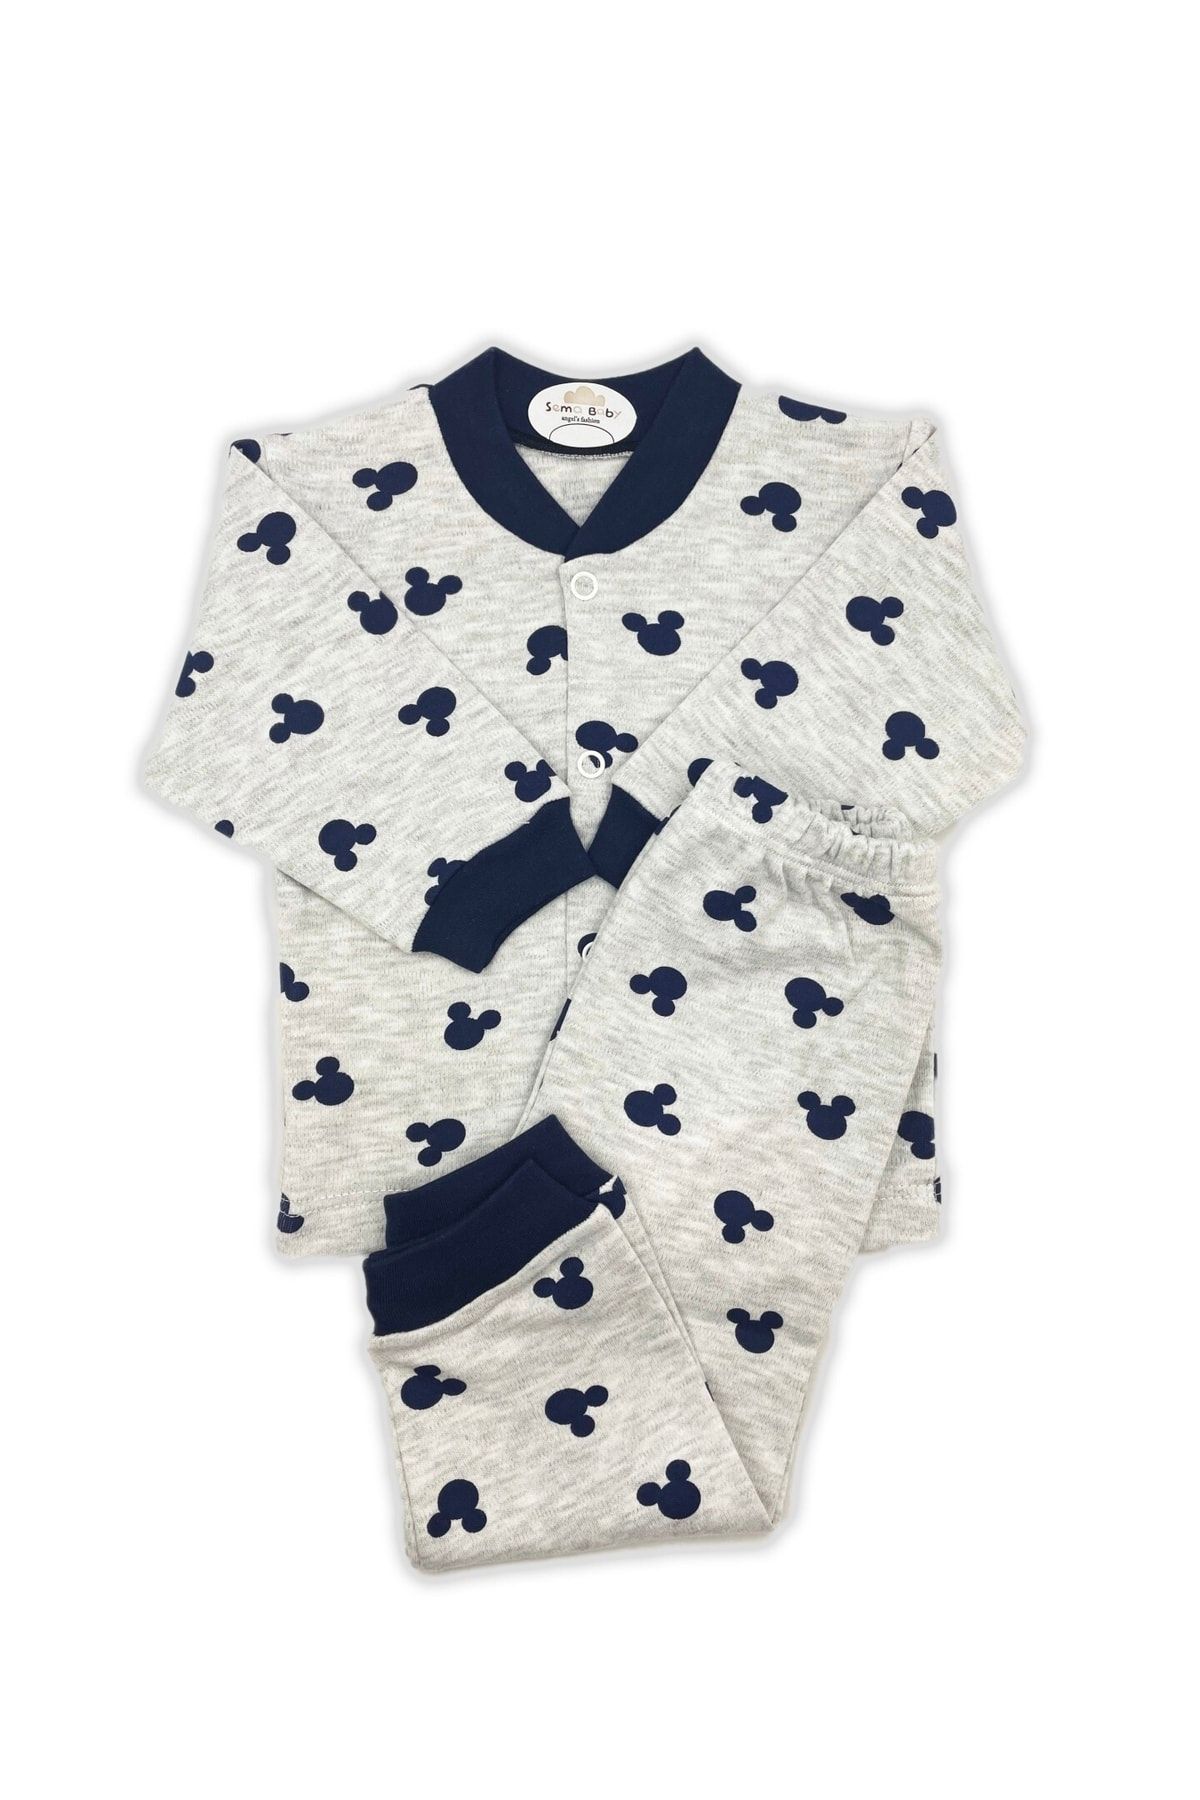 Sema Baby Mickey Mouse Bebek Pijama Takımı – Gri & Lacivert